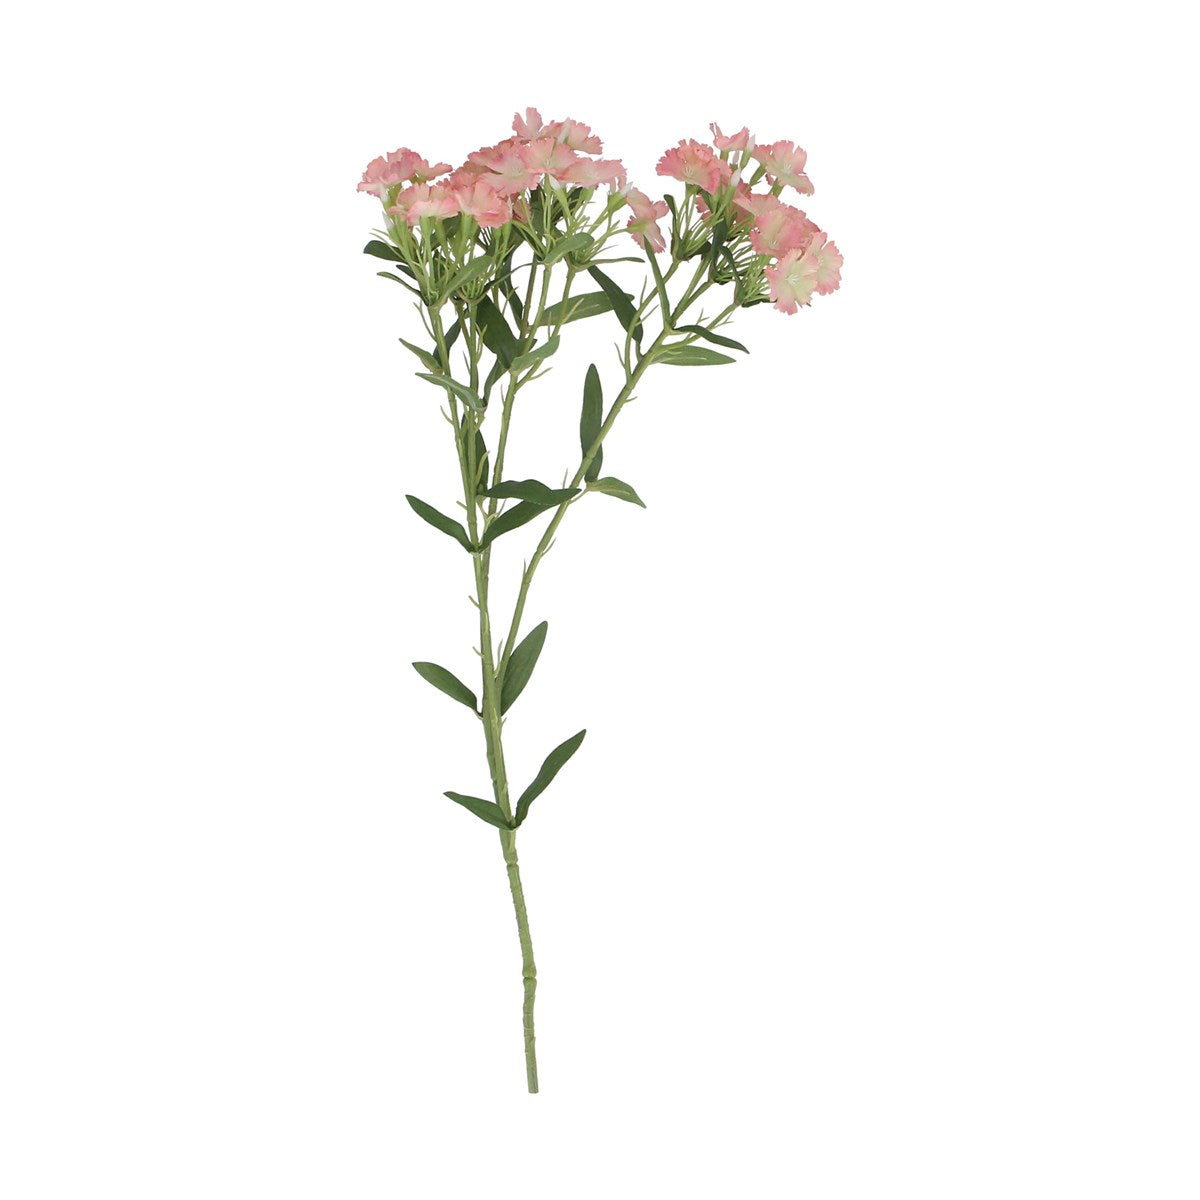 Blush Pink Spray Carnation Stem